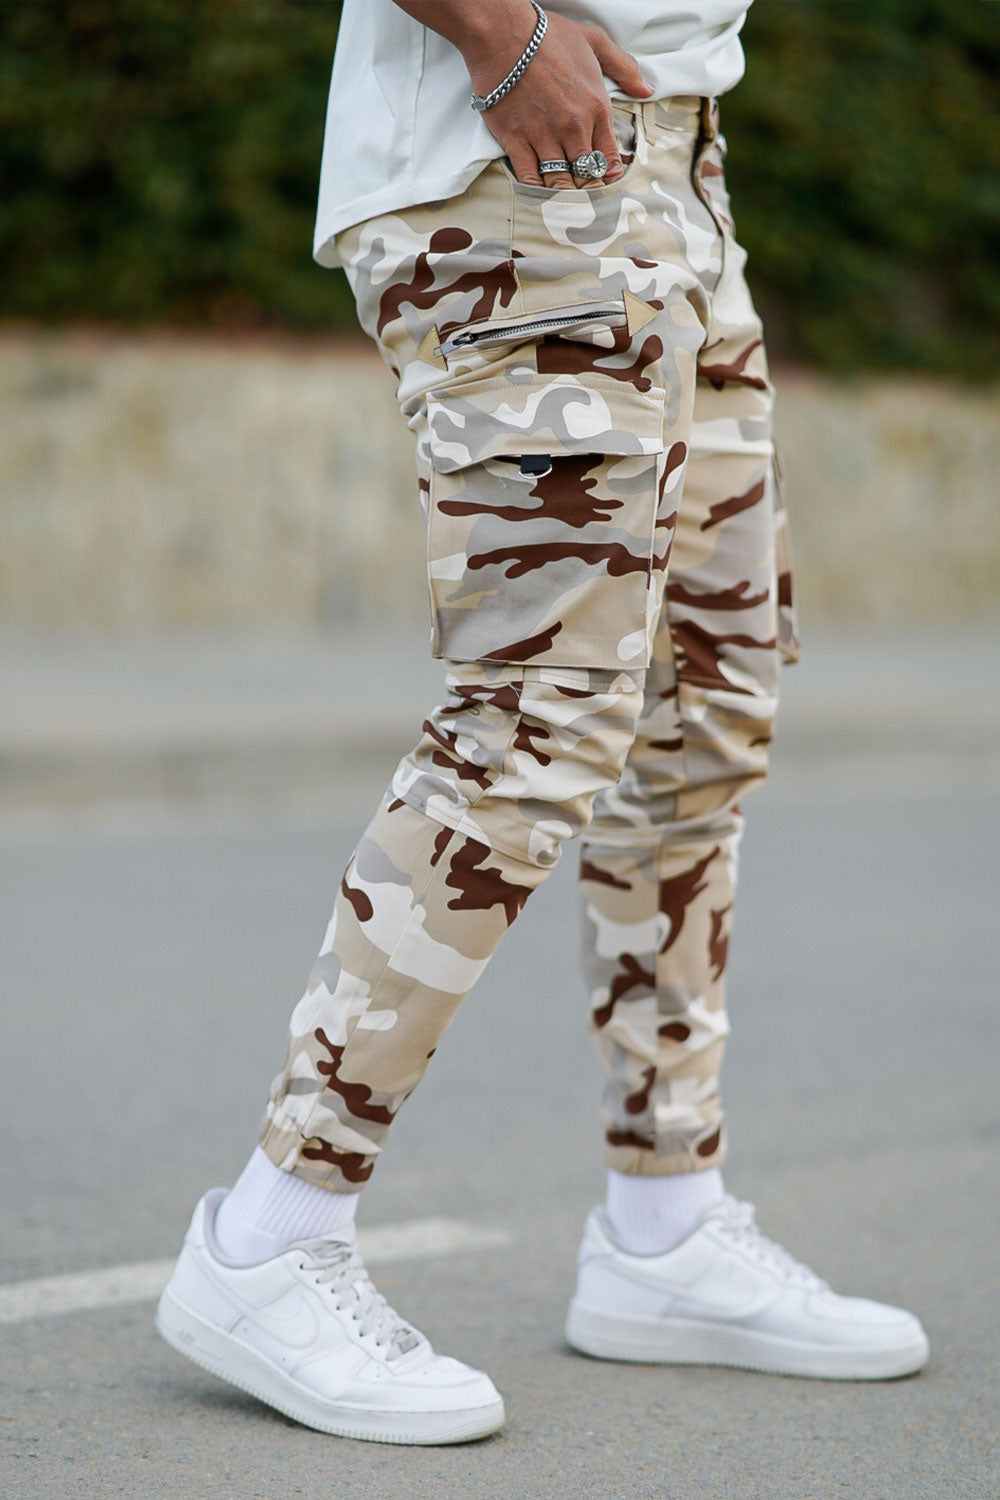 men's camouflage cargo pants